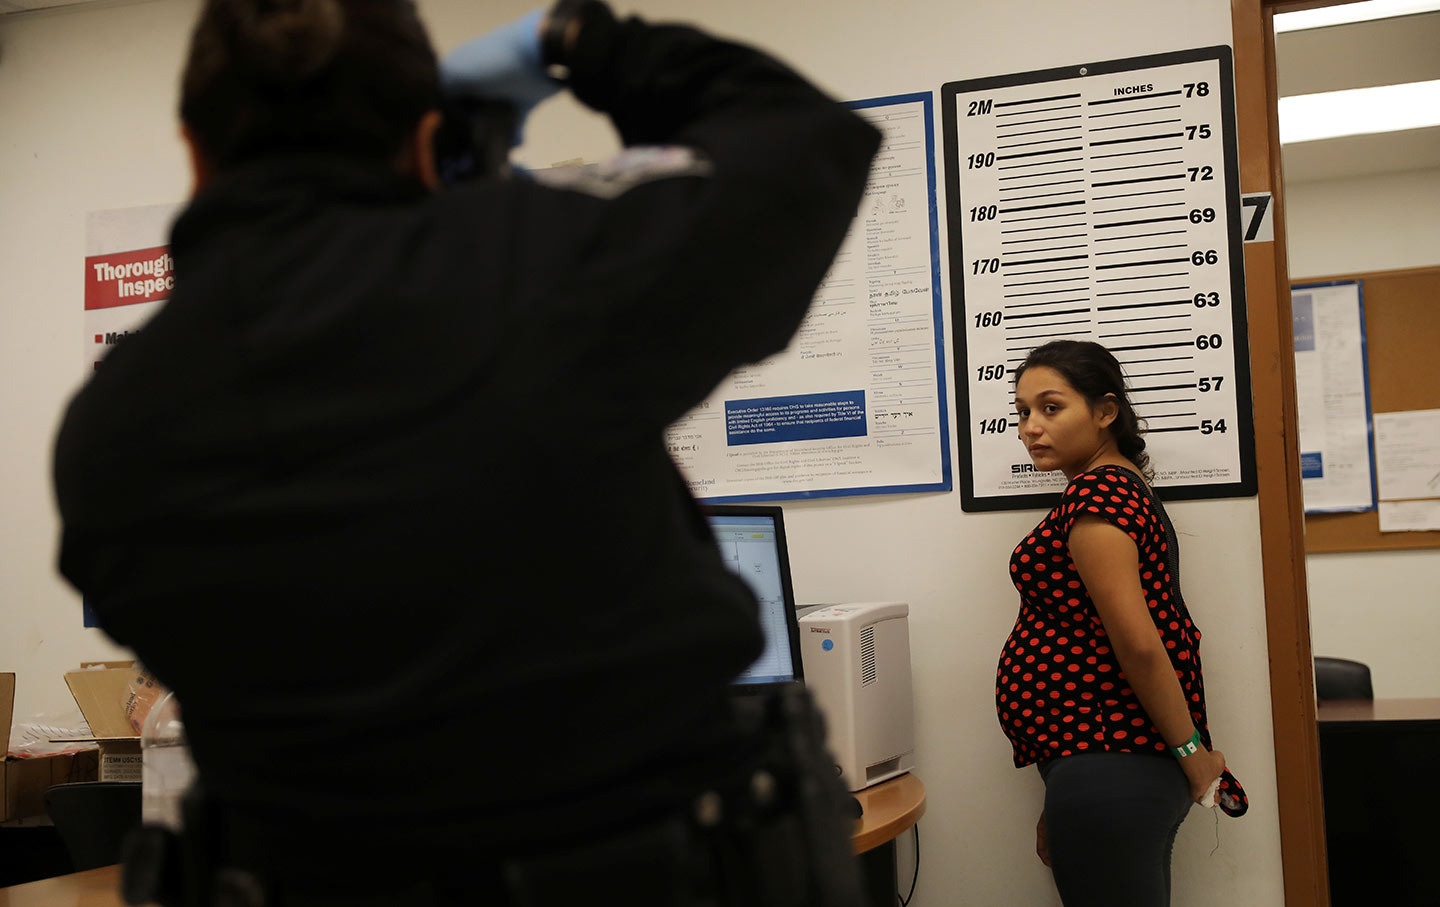 A pregnant woman seeking asylum